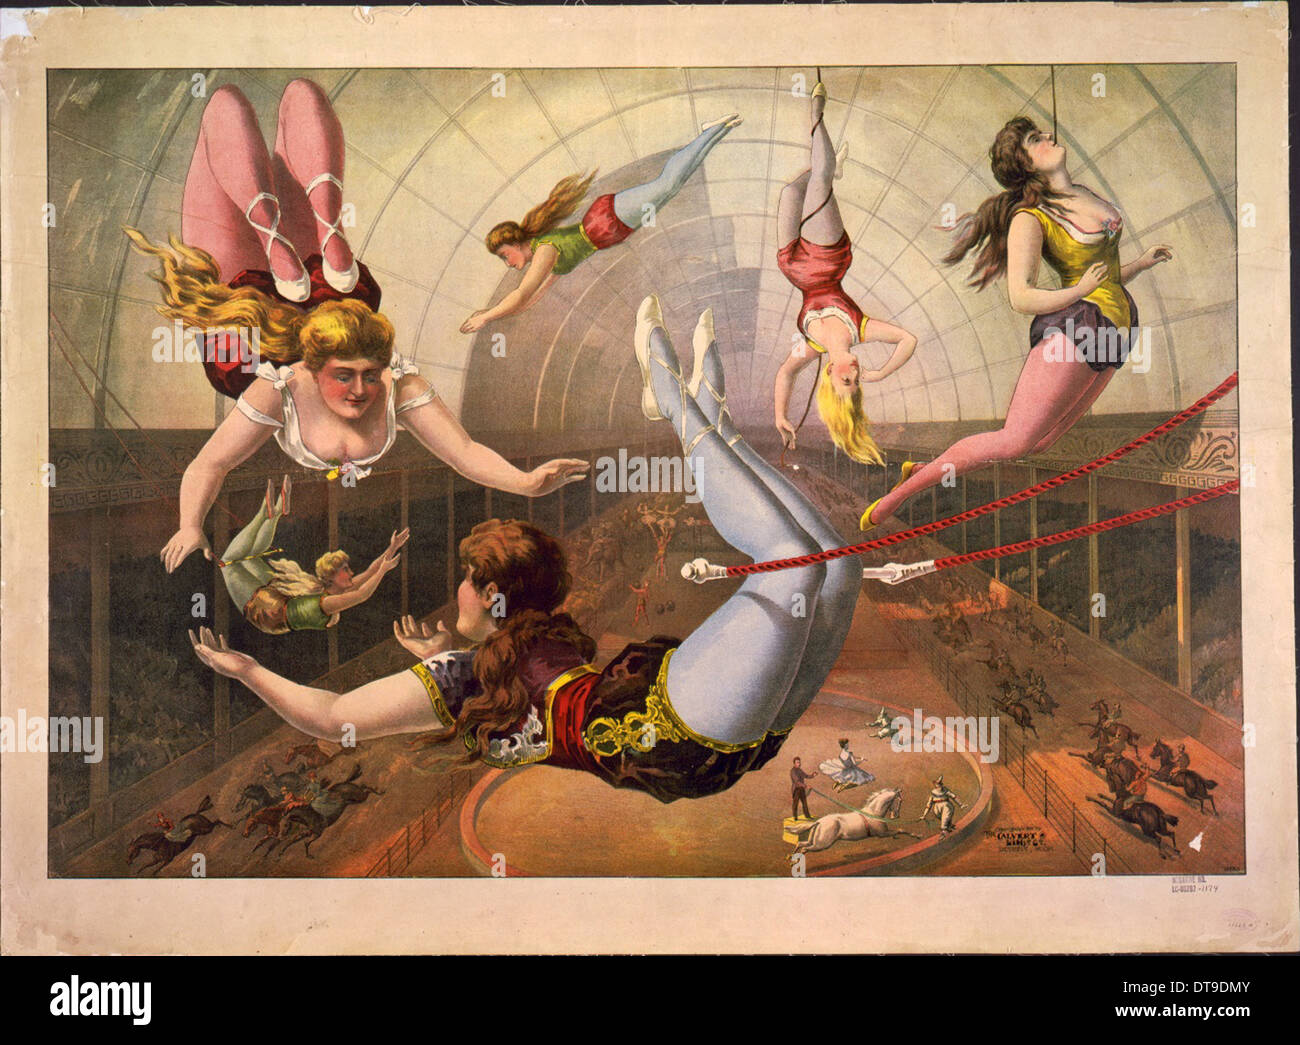 Female acrobats on trapezes at circus, c. 1890. Artist: Calvert Litho. Co. Stock Photo